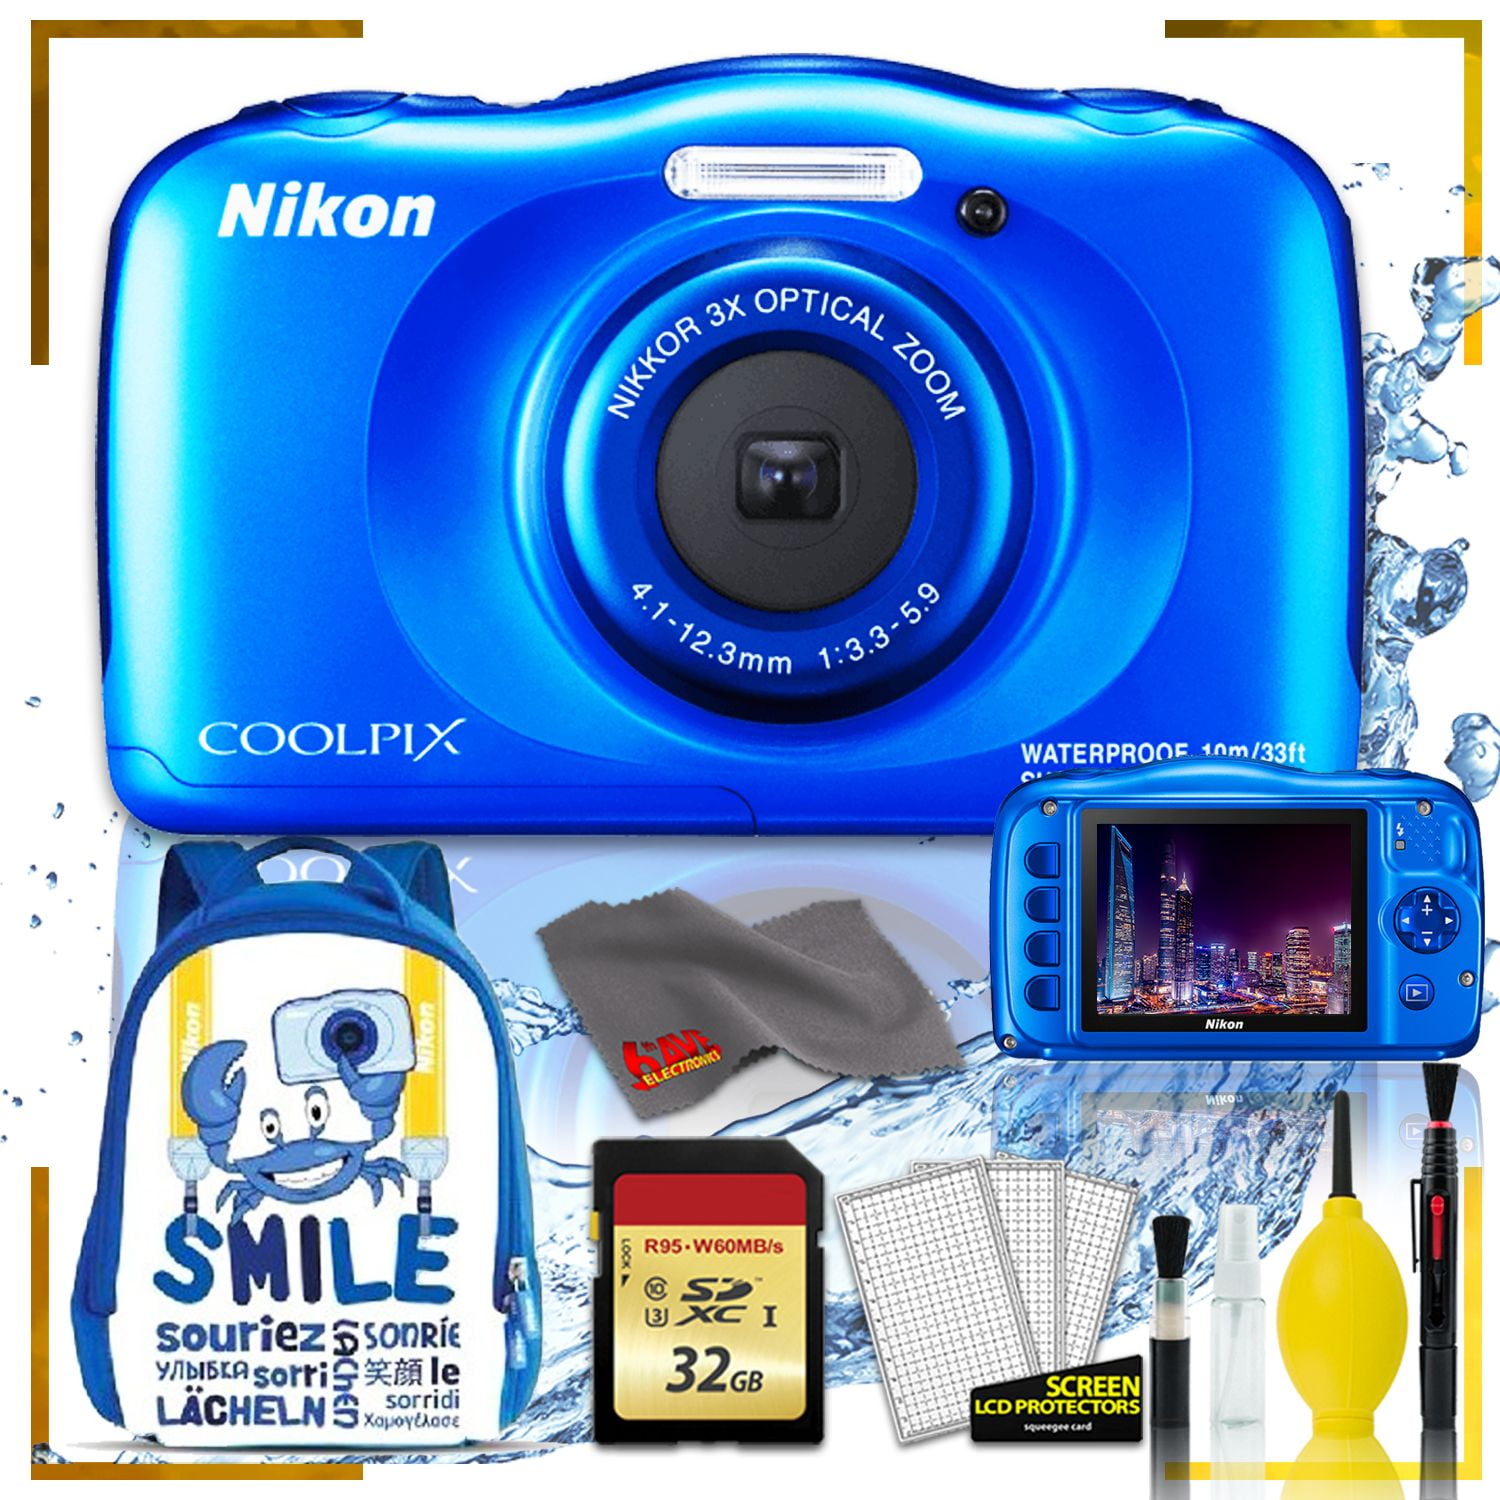 Nikon Coolpix W150 Digital Camera - Blue (Intl Model) with Camera